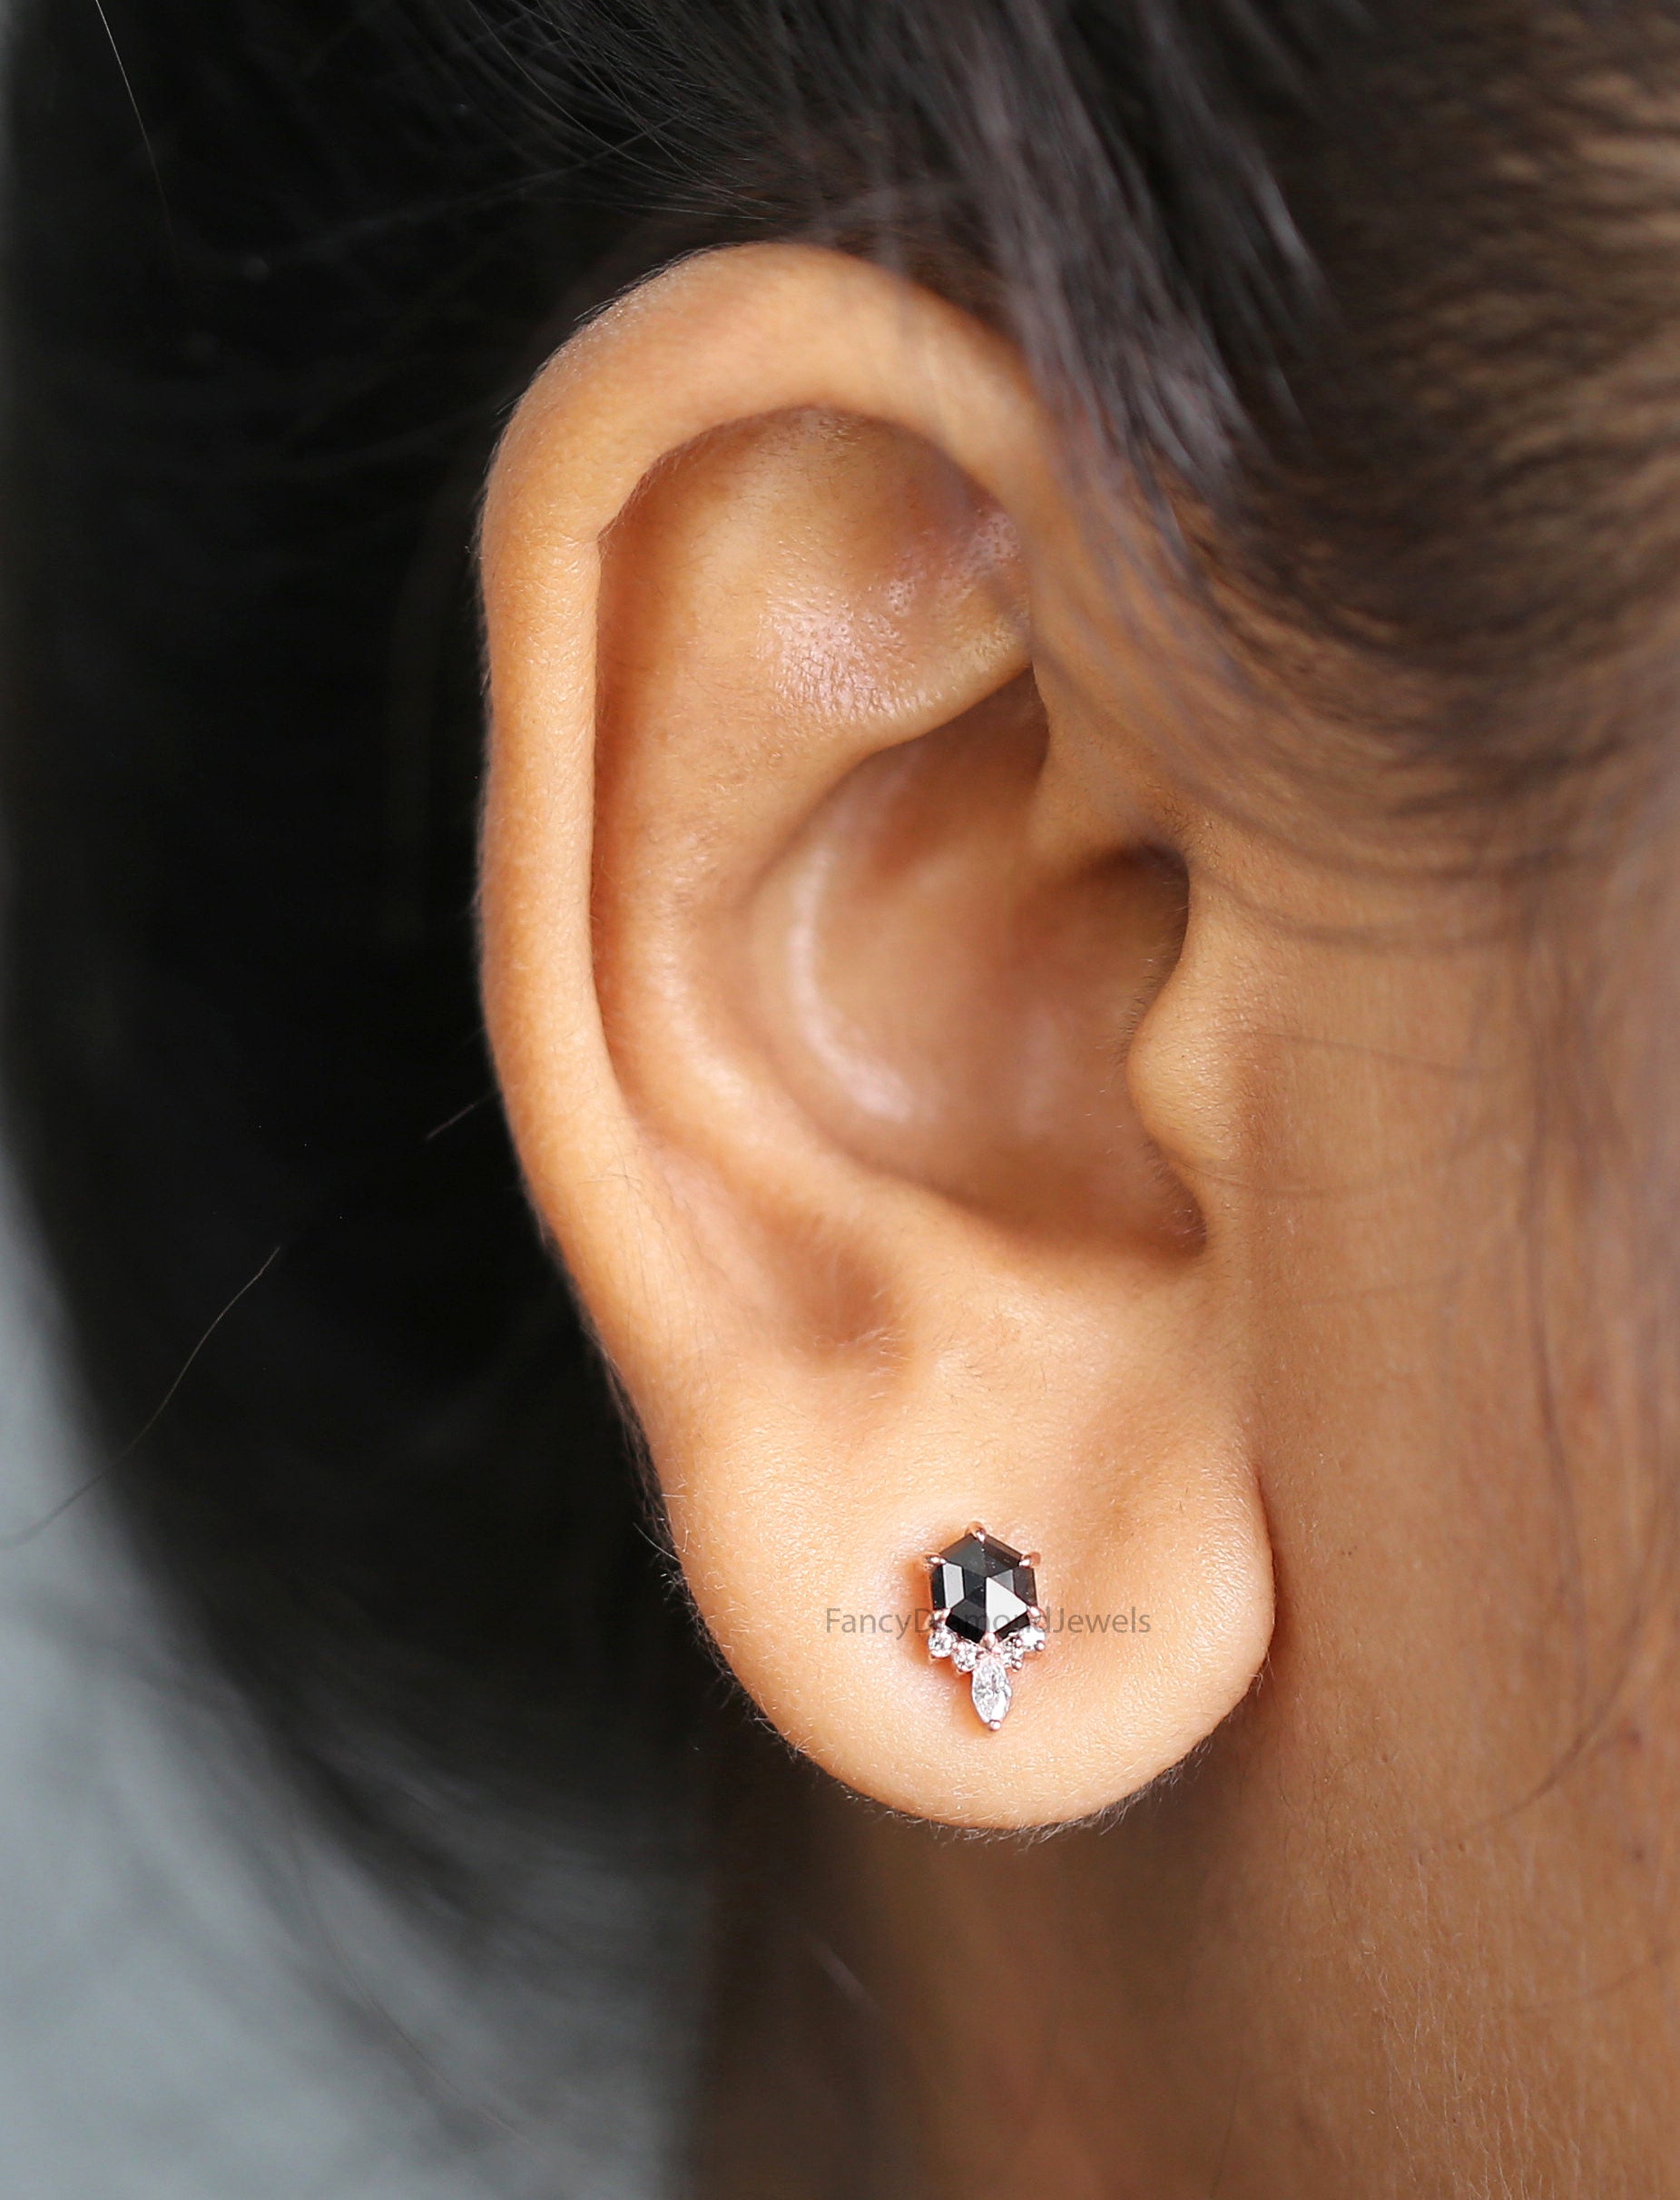 Hexagon Cut Black Color Diamond Earring 0.58 Ct 5.03 MM Hexagon Shape Diamond Earring 14K Solid Rose Gold Silver Engagement Earring QK2629